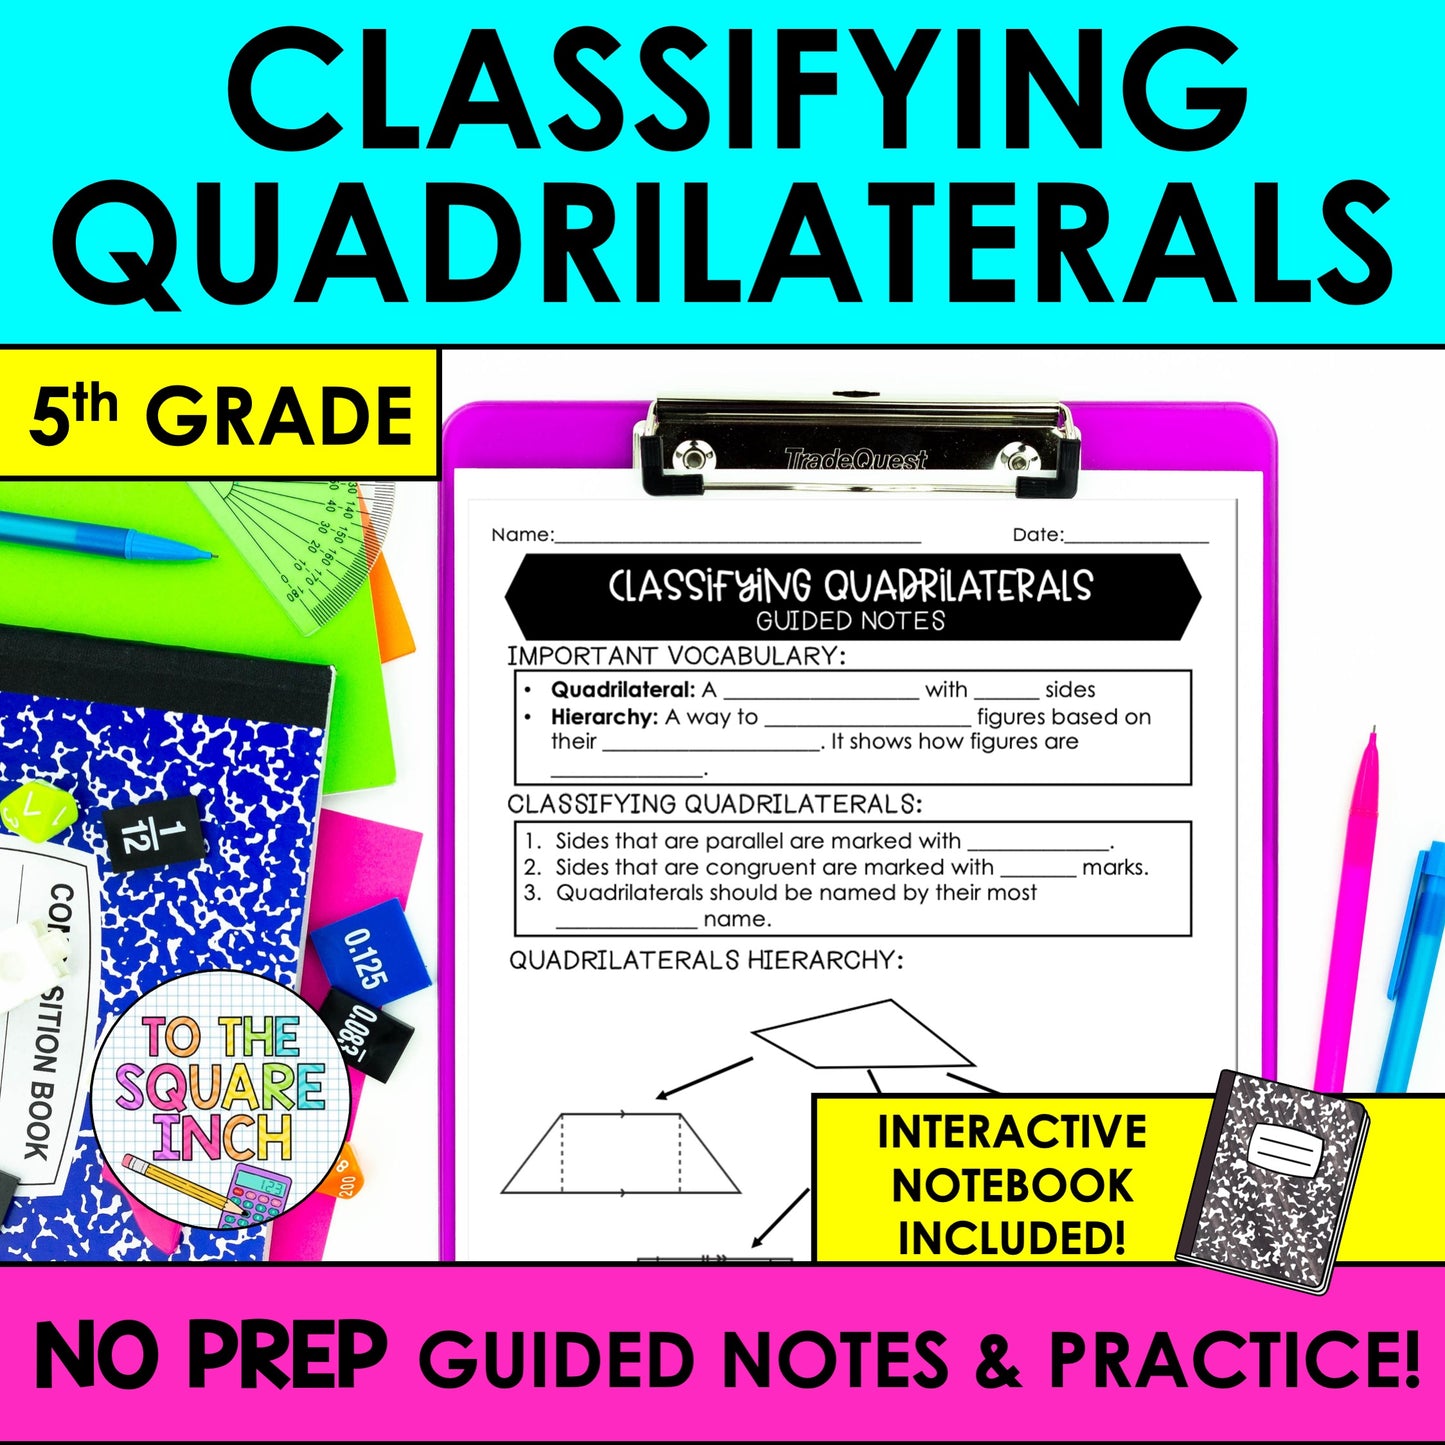 Classifying Quadrilaterals Notes